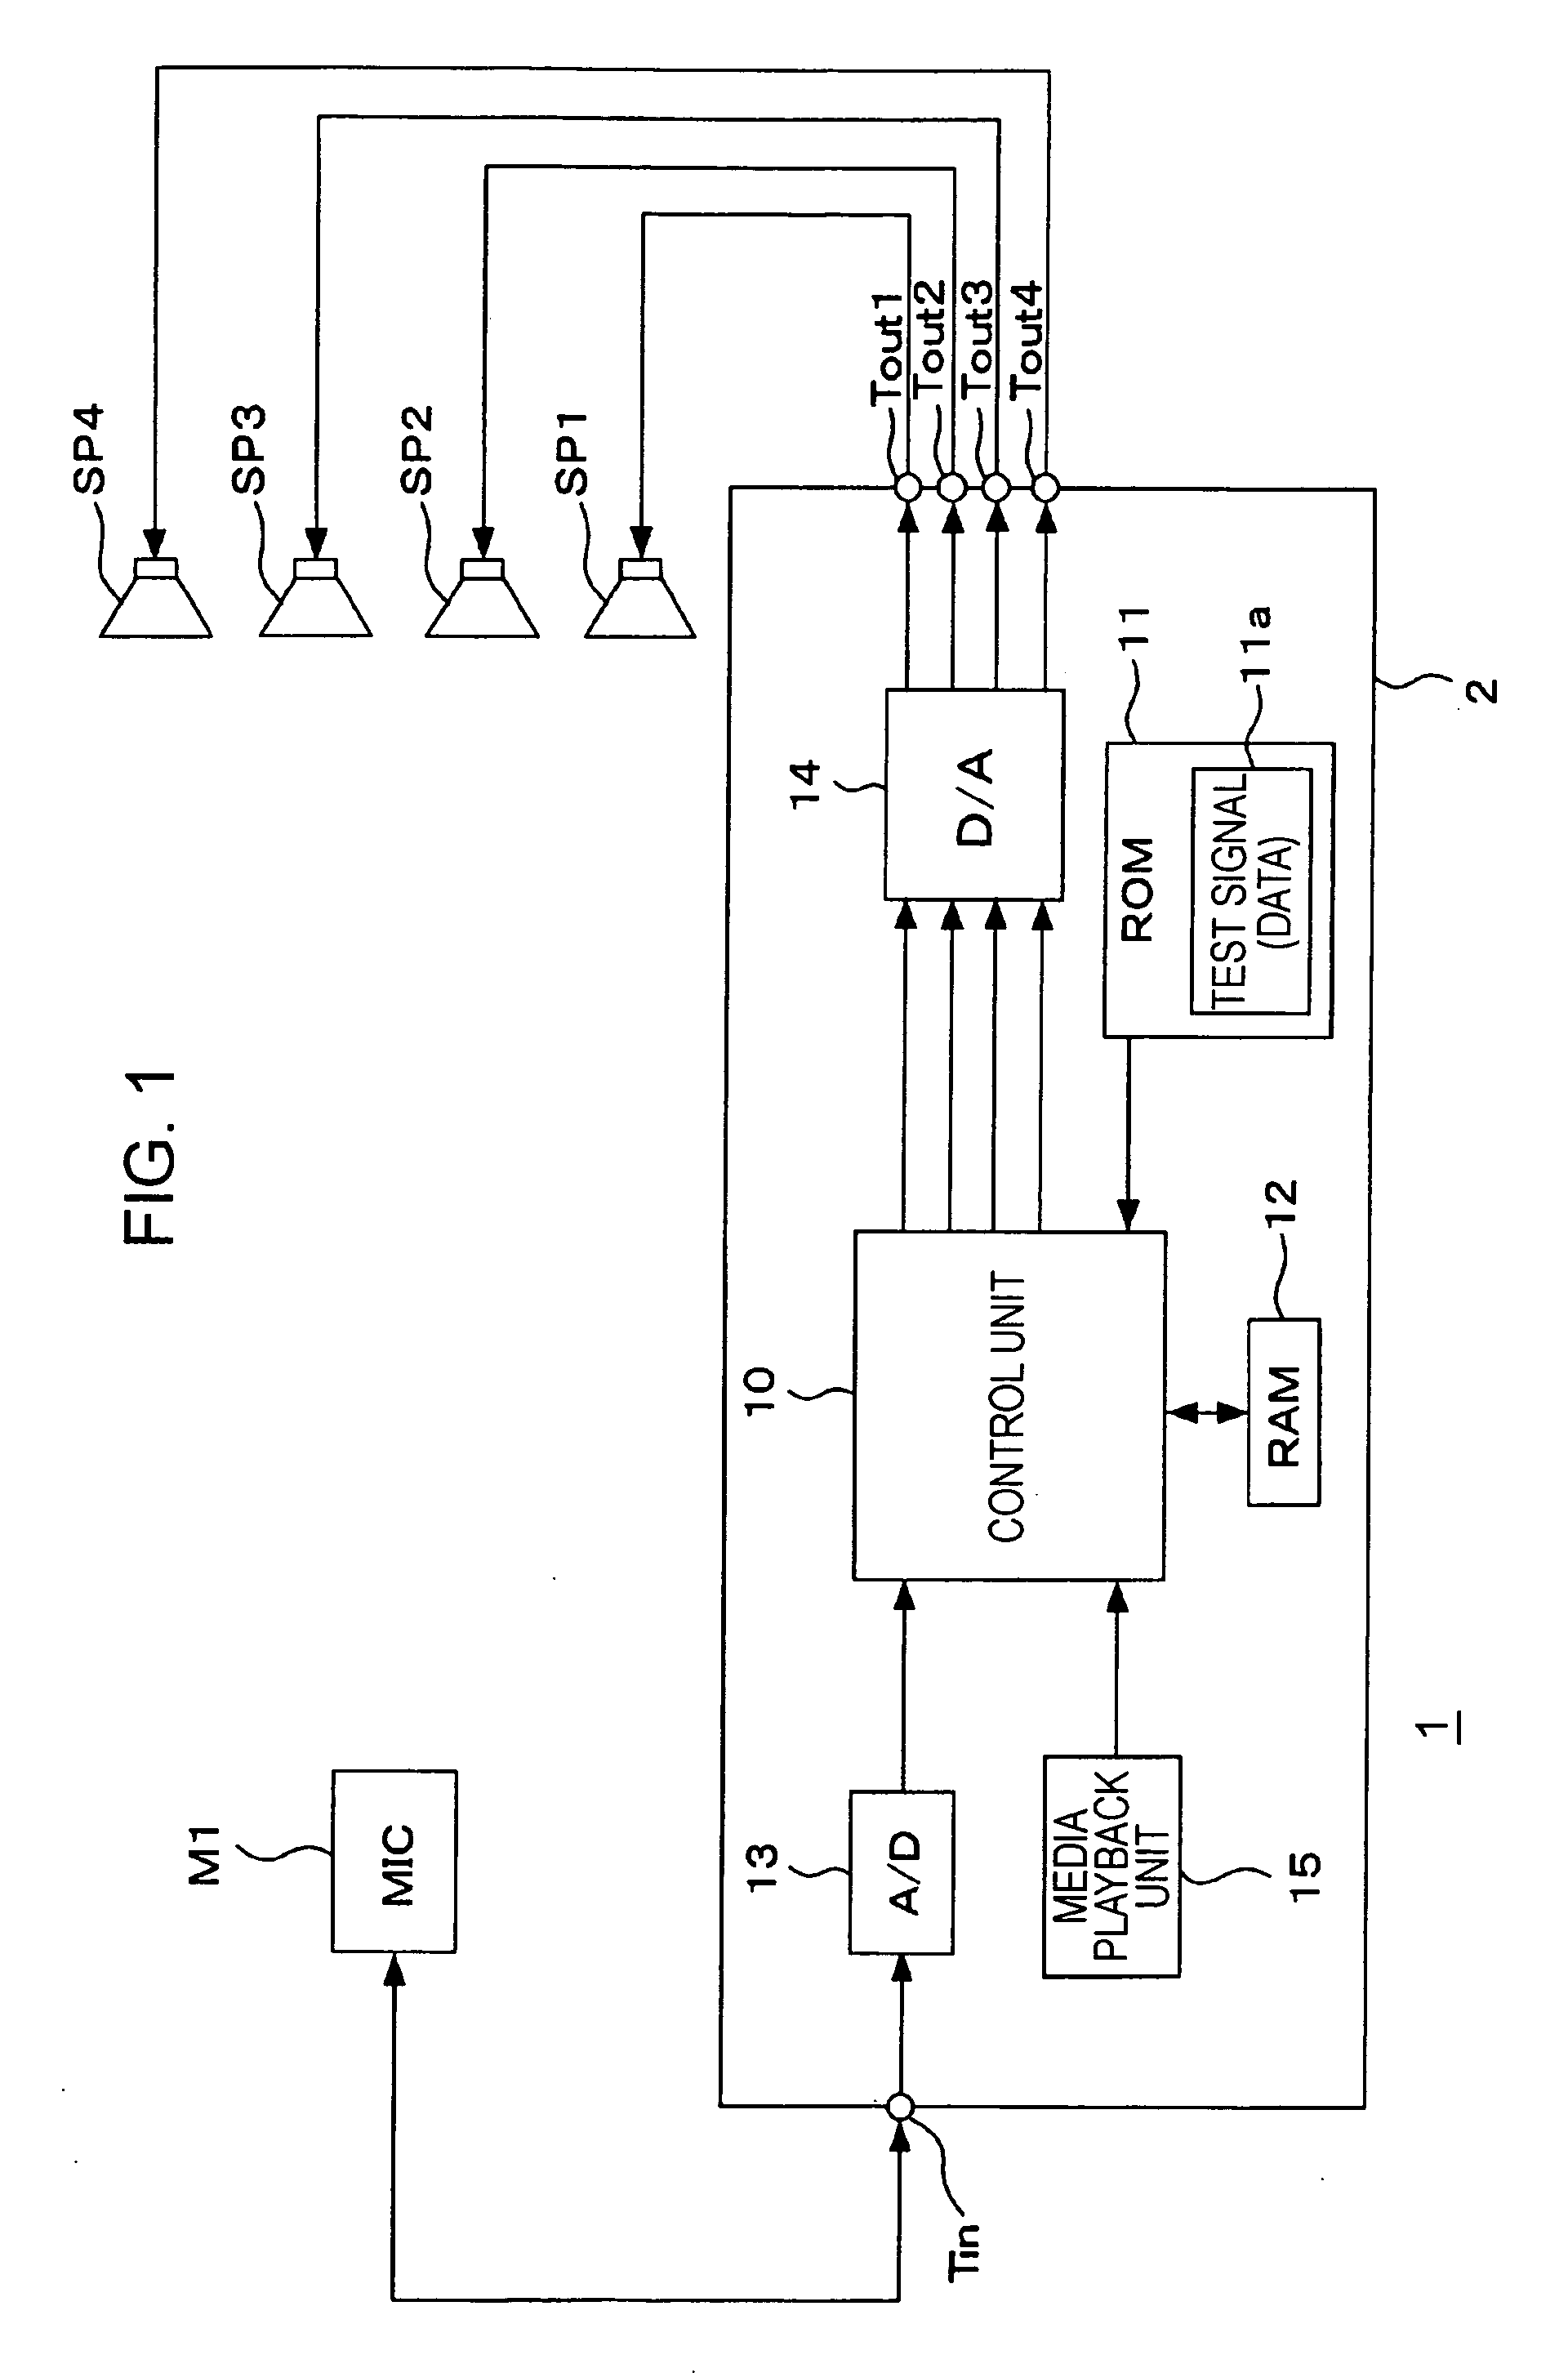 Sound measuring apparatus and method, and audio signal processing apparatus